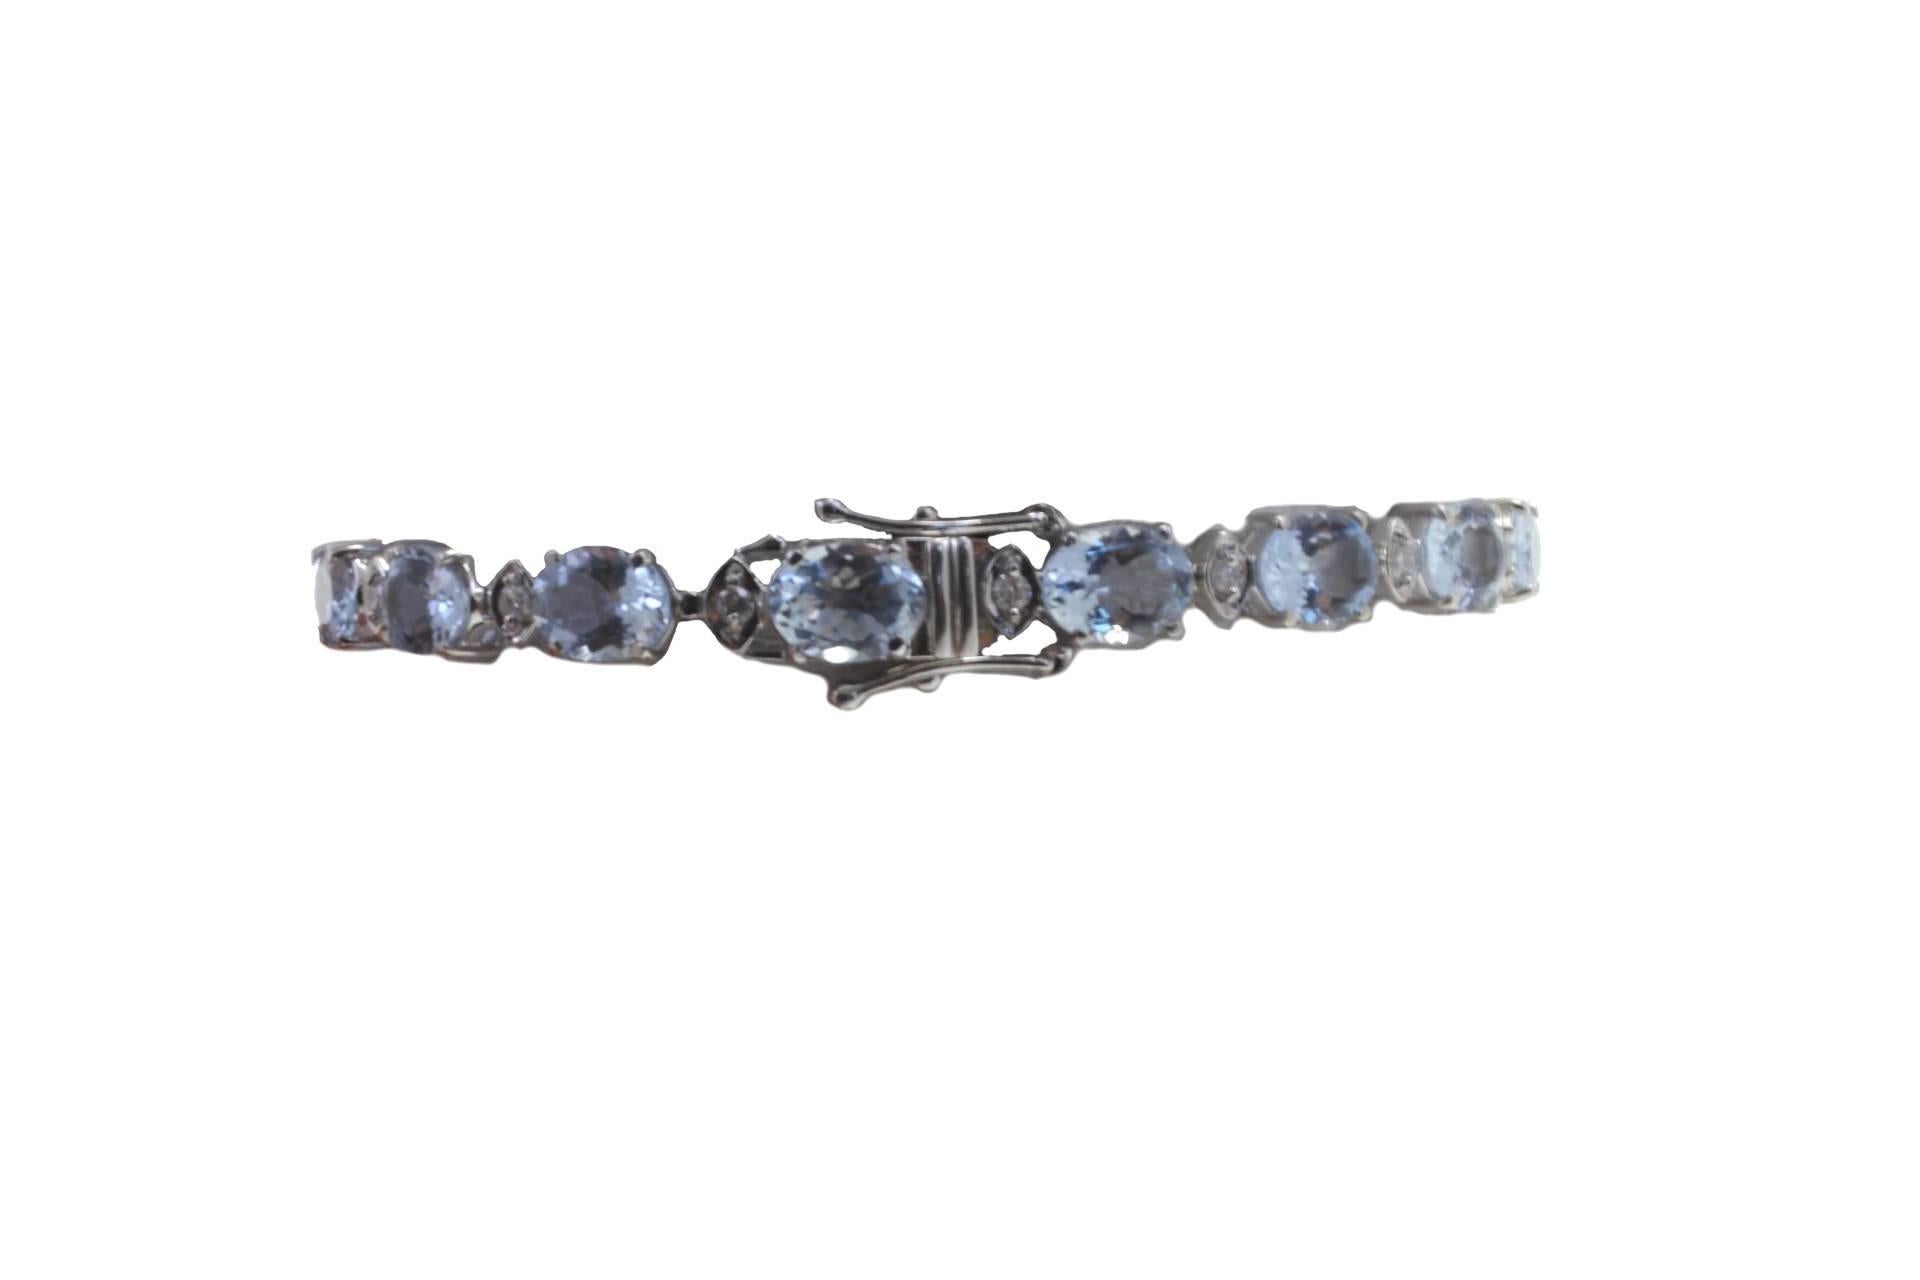 Aquamarine bracelet in 18kt white gold embellished with diamonds every aquamarine gem.

diamonds 0.83kt
tot weight 17.7gr
r.f.  orig